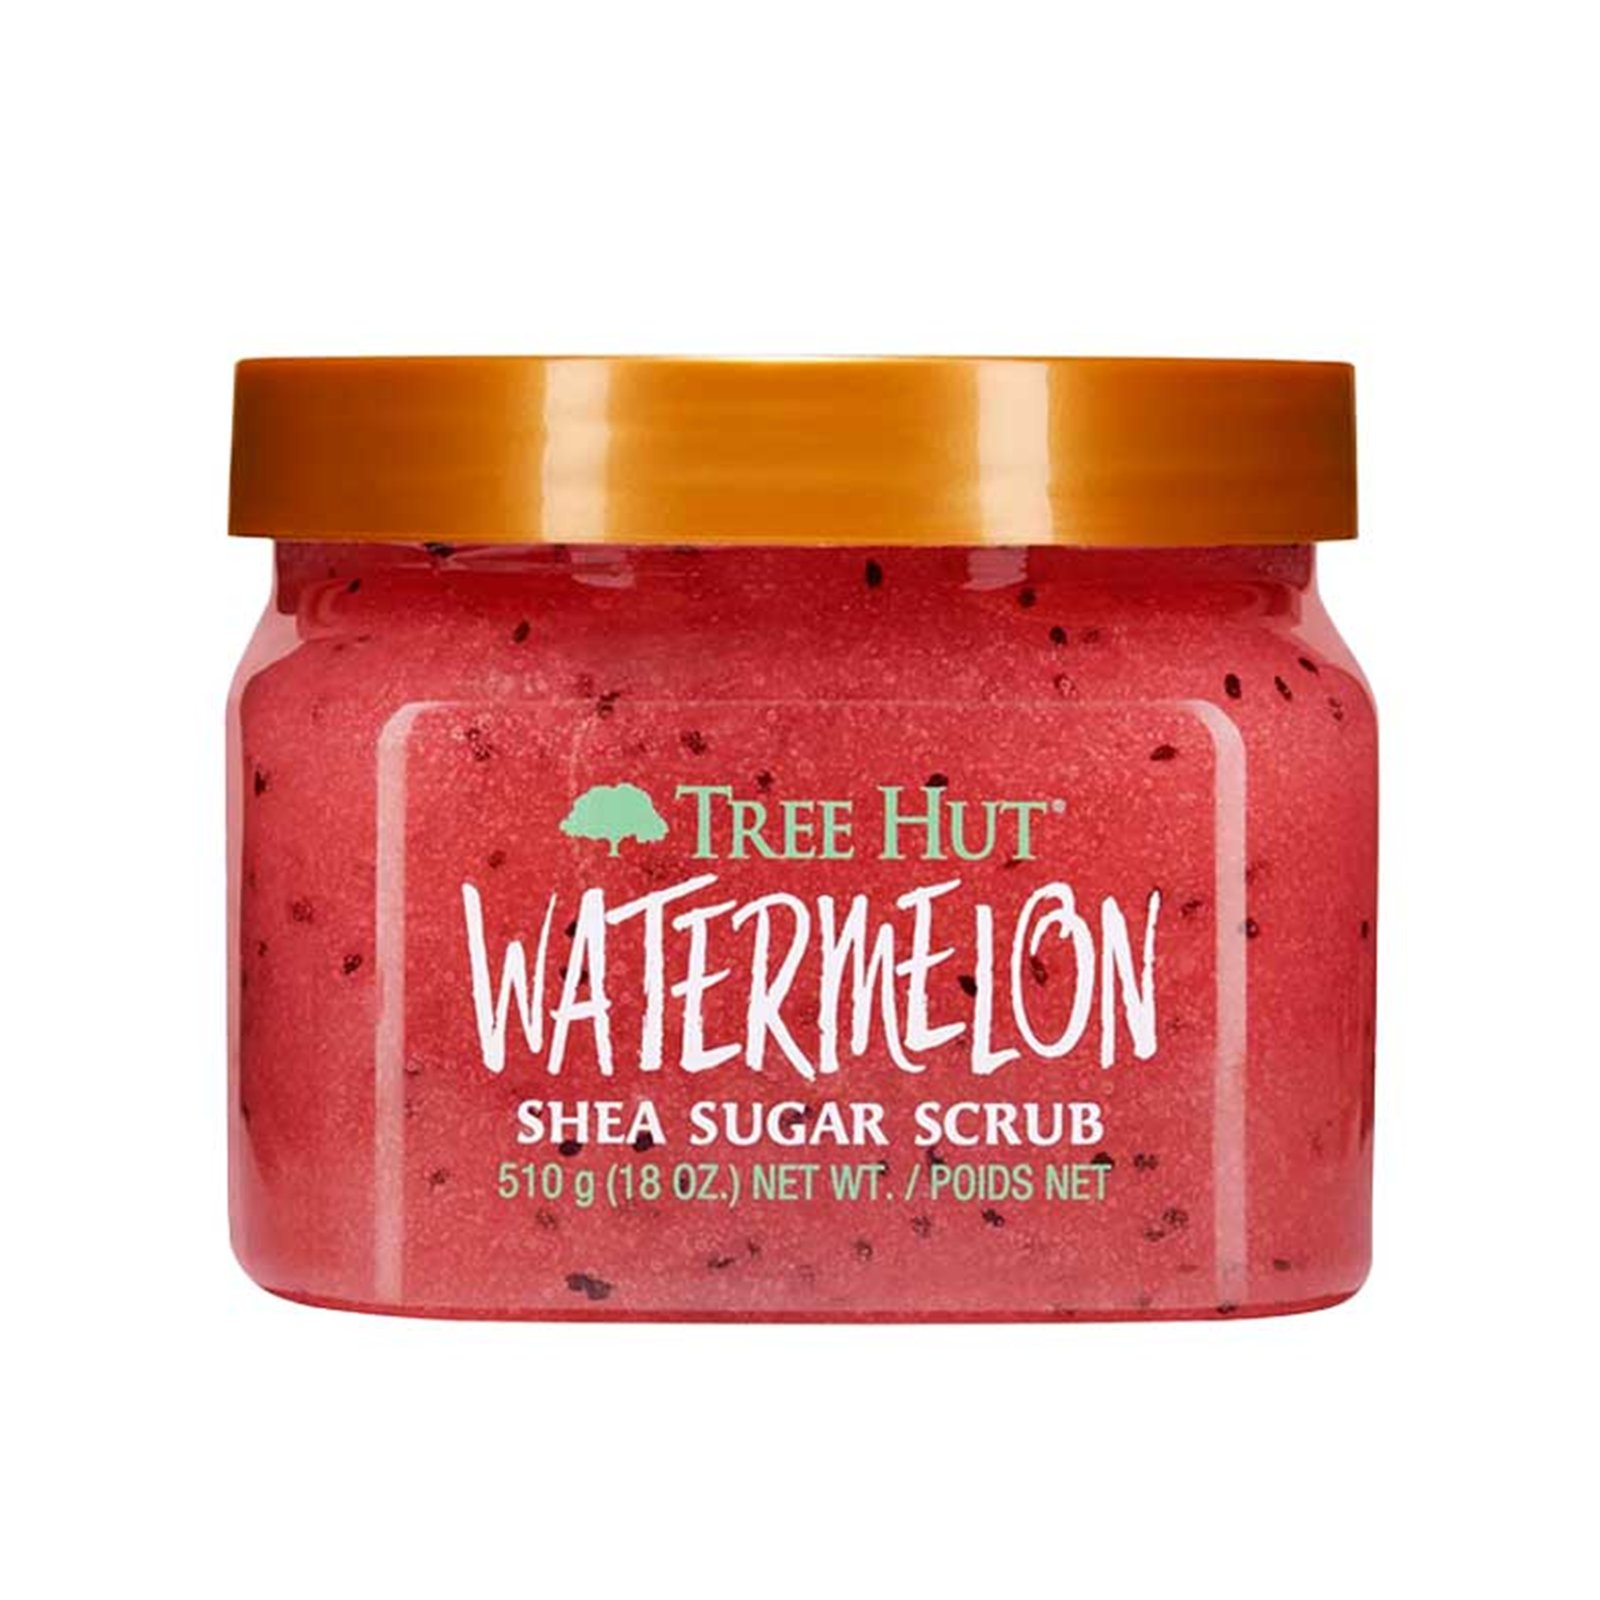 Tree Hut Watermelon Shea Sugar Scrub 510g (18 oz)